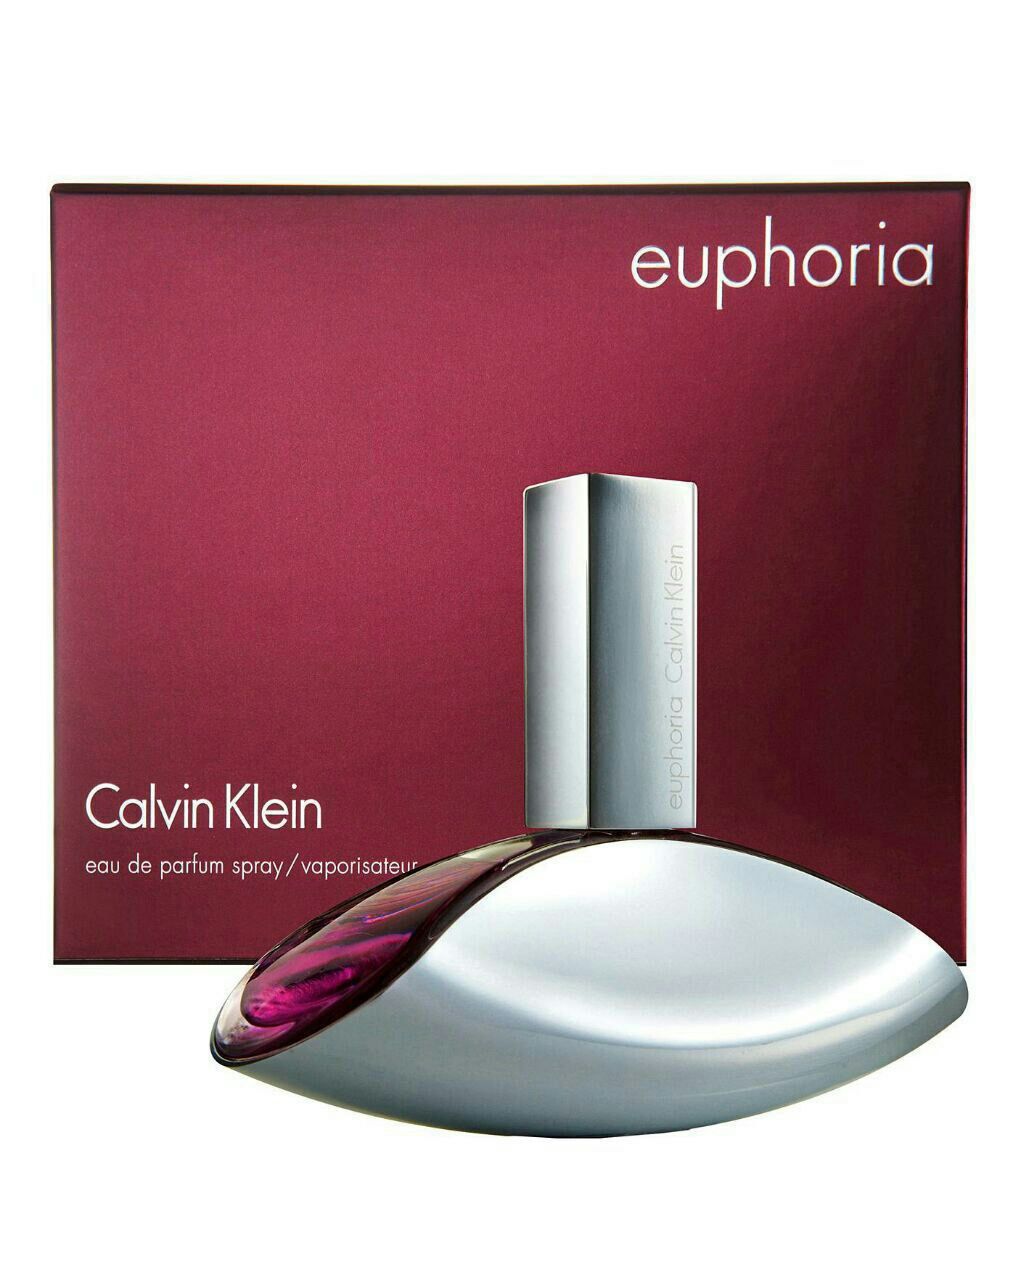 Calvin Klein Euphoria edp 100ml ORIGINAL